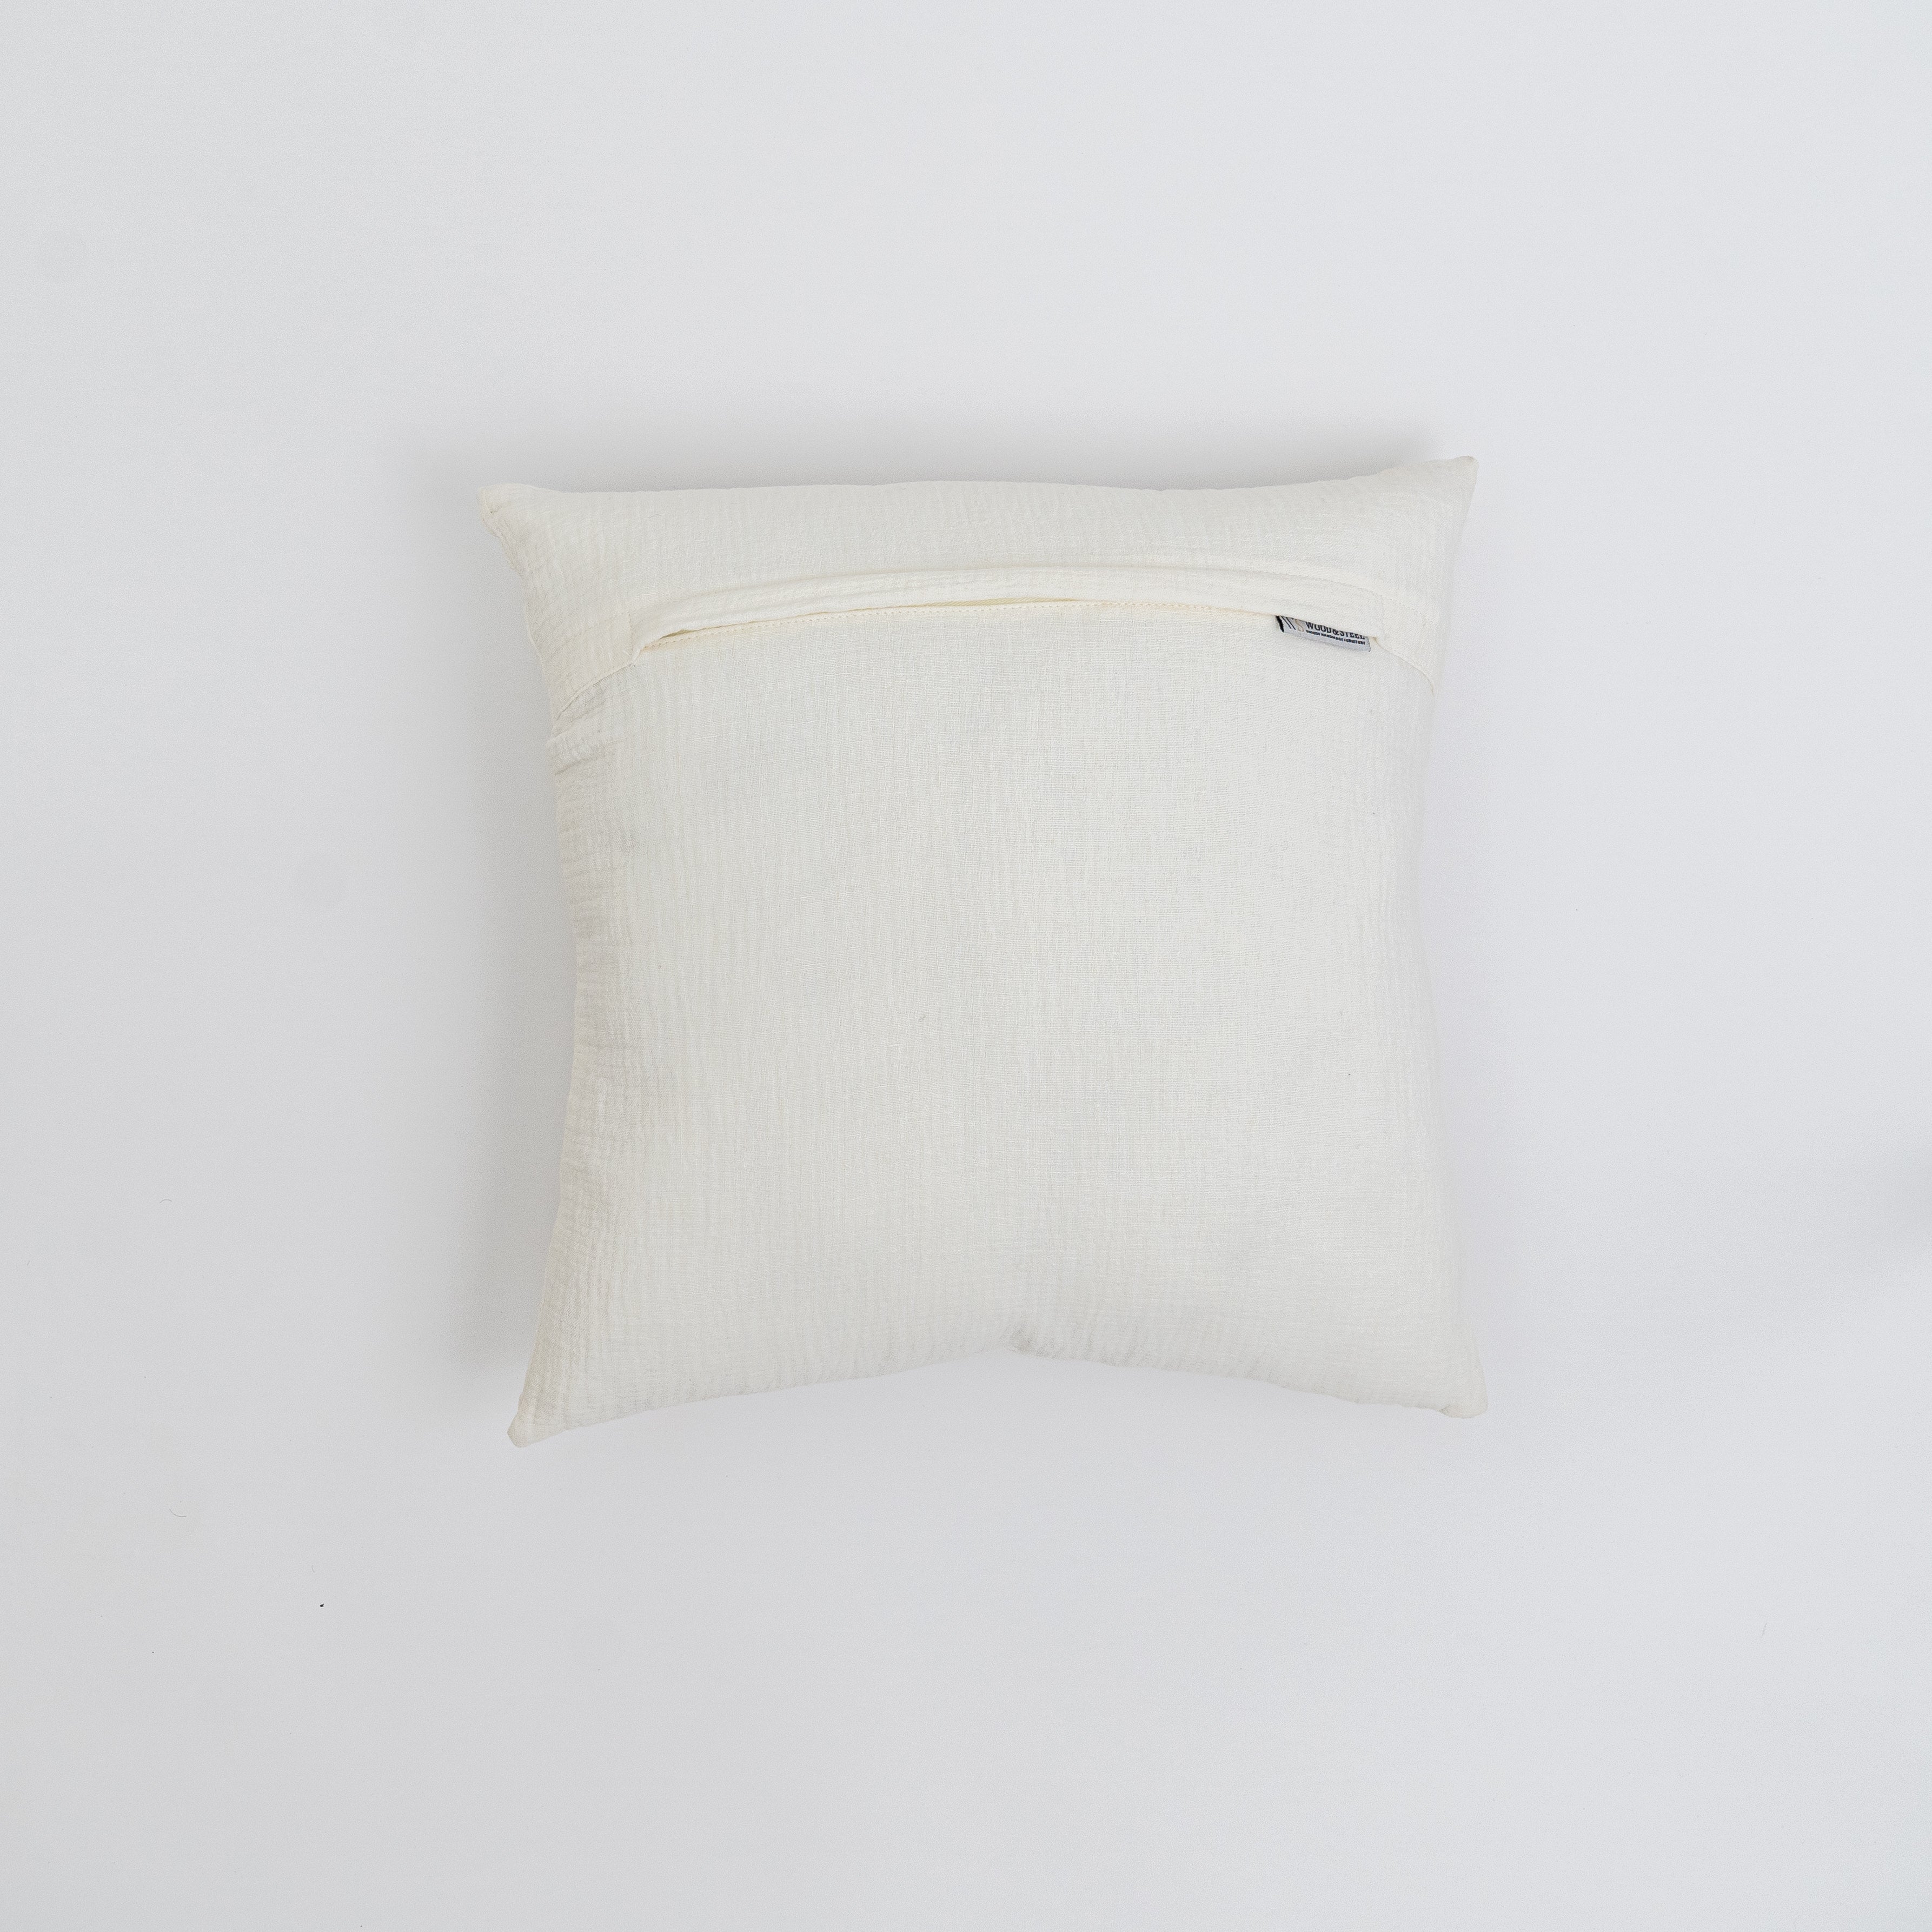 Cushion Cover Off-White 45 x45cm  - WS Living - UAE - Cushions Wood and steel Furnitures - Dubai